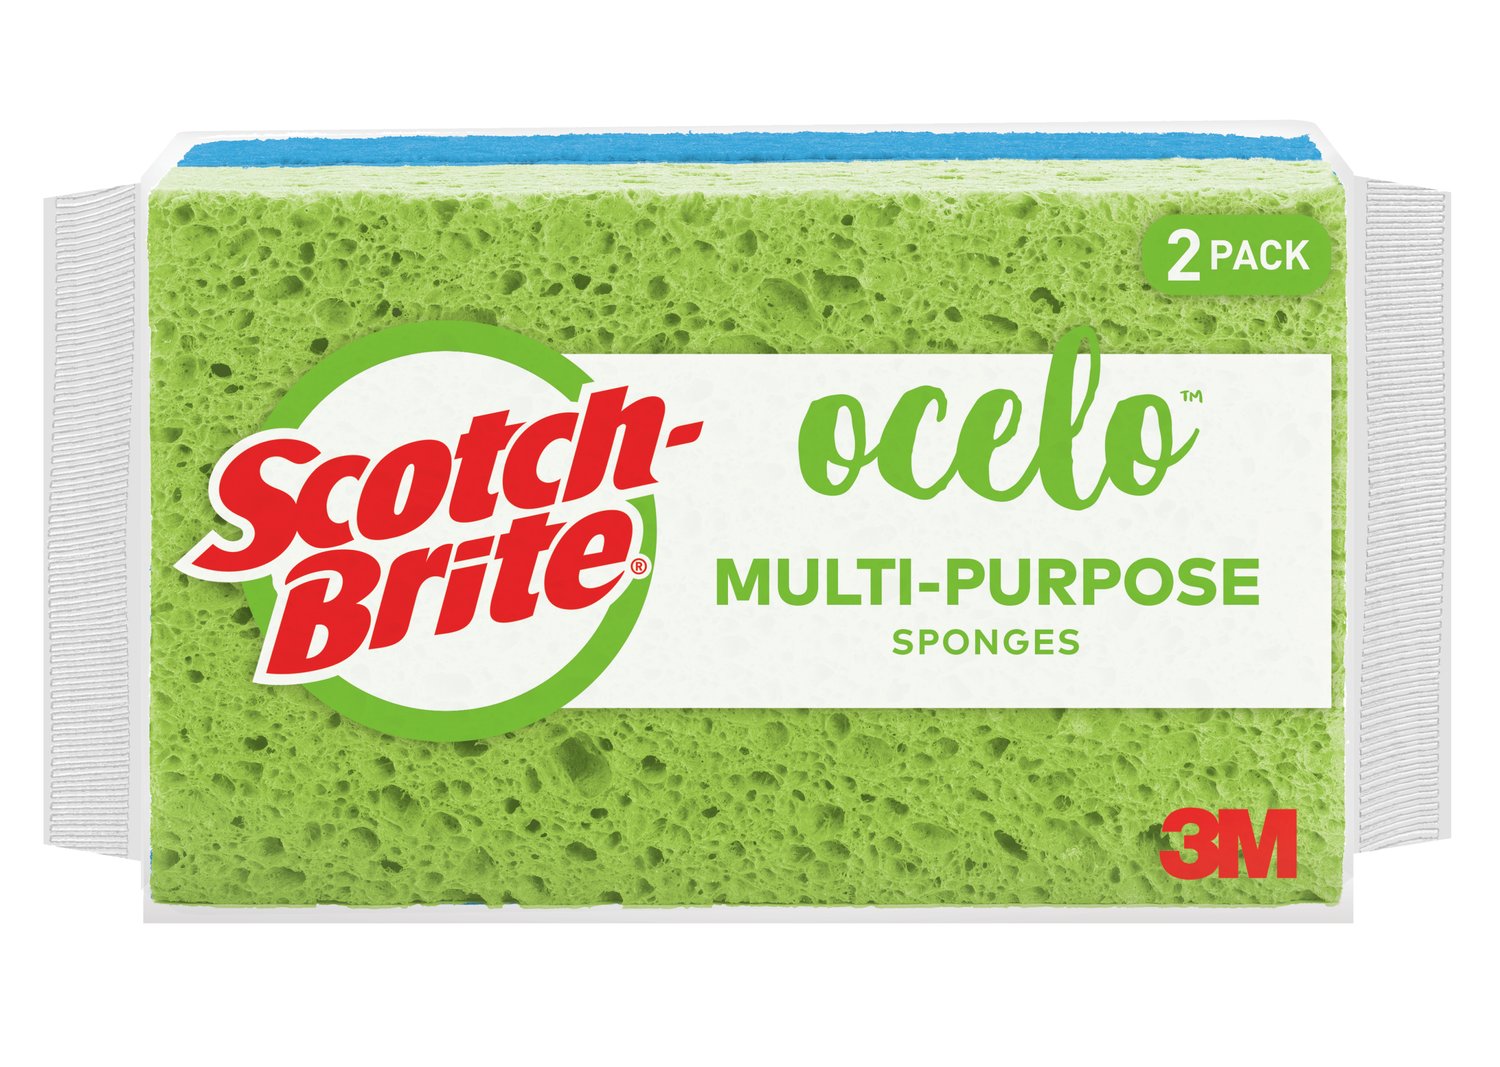 7100208942 - Scotch-Brite ocelo Utility Sponge 7243-T, 2 pack, 12/2